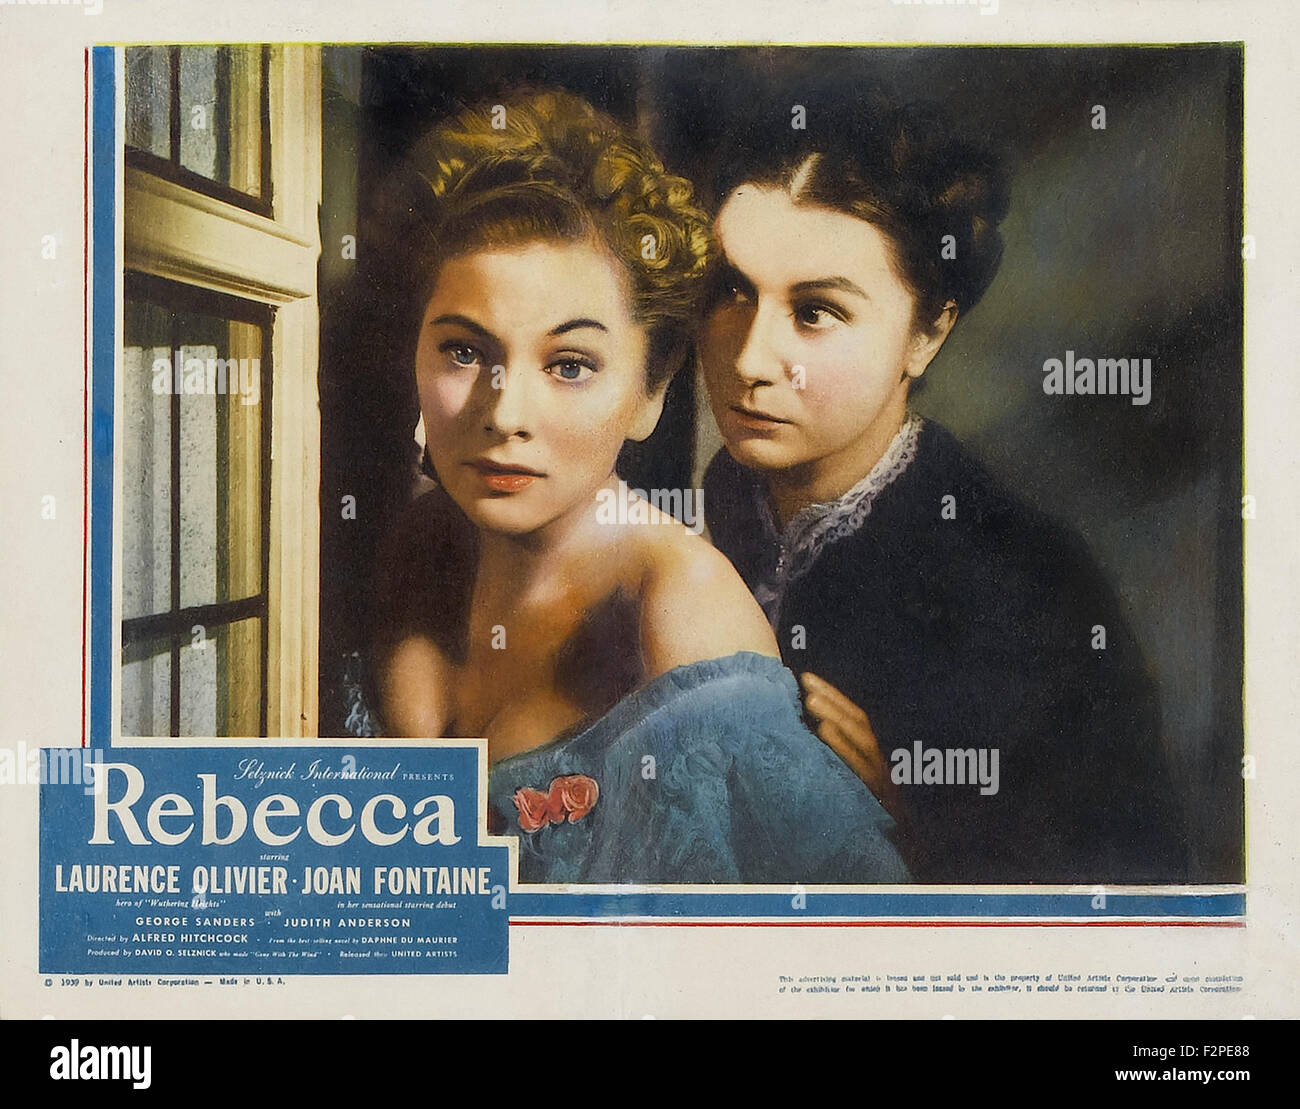 Rebecca - Movie Poster Stock Photo - Alamy